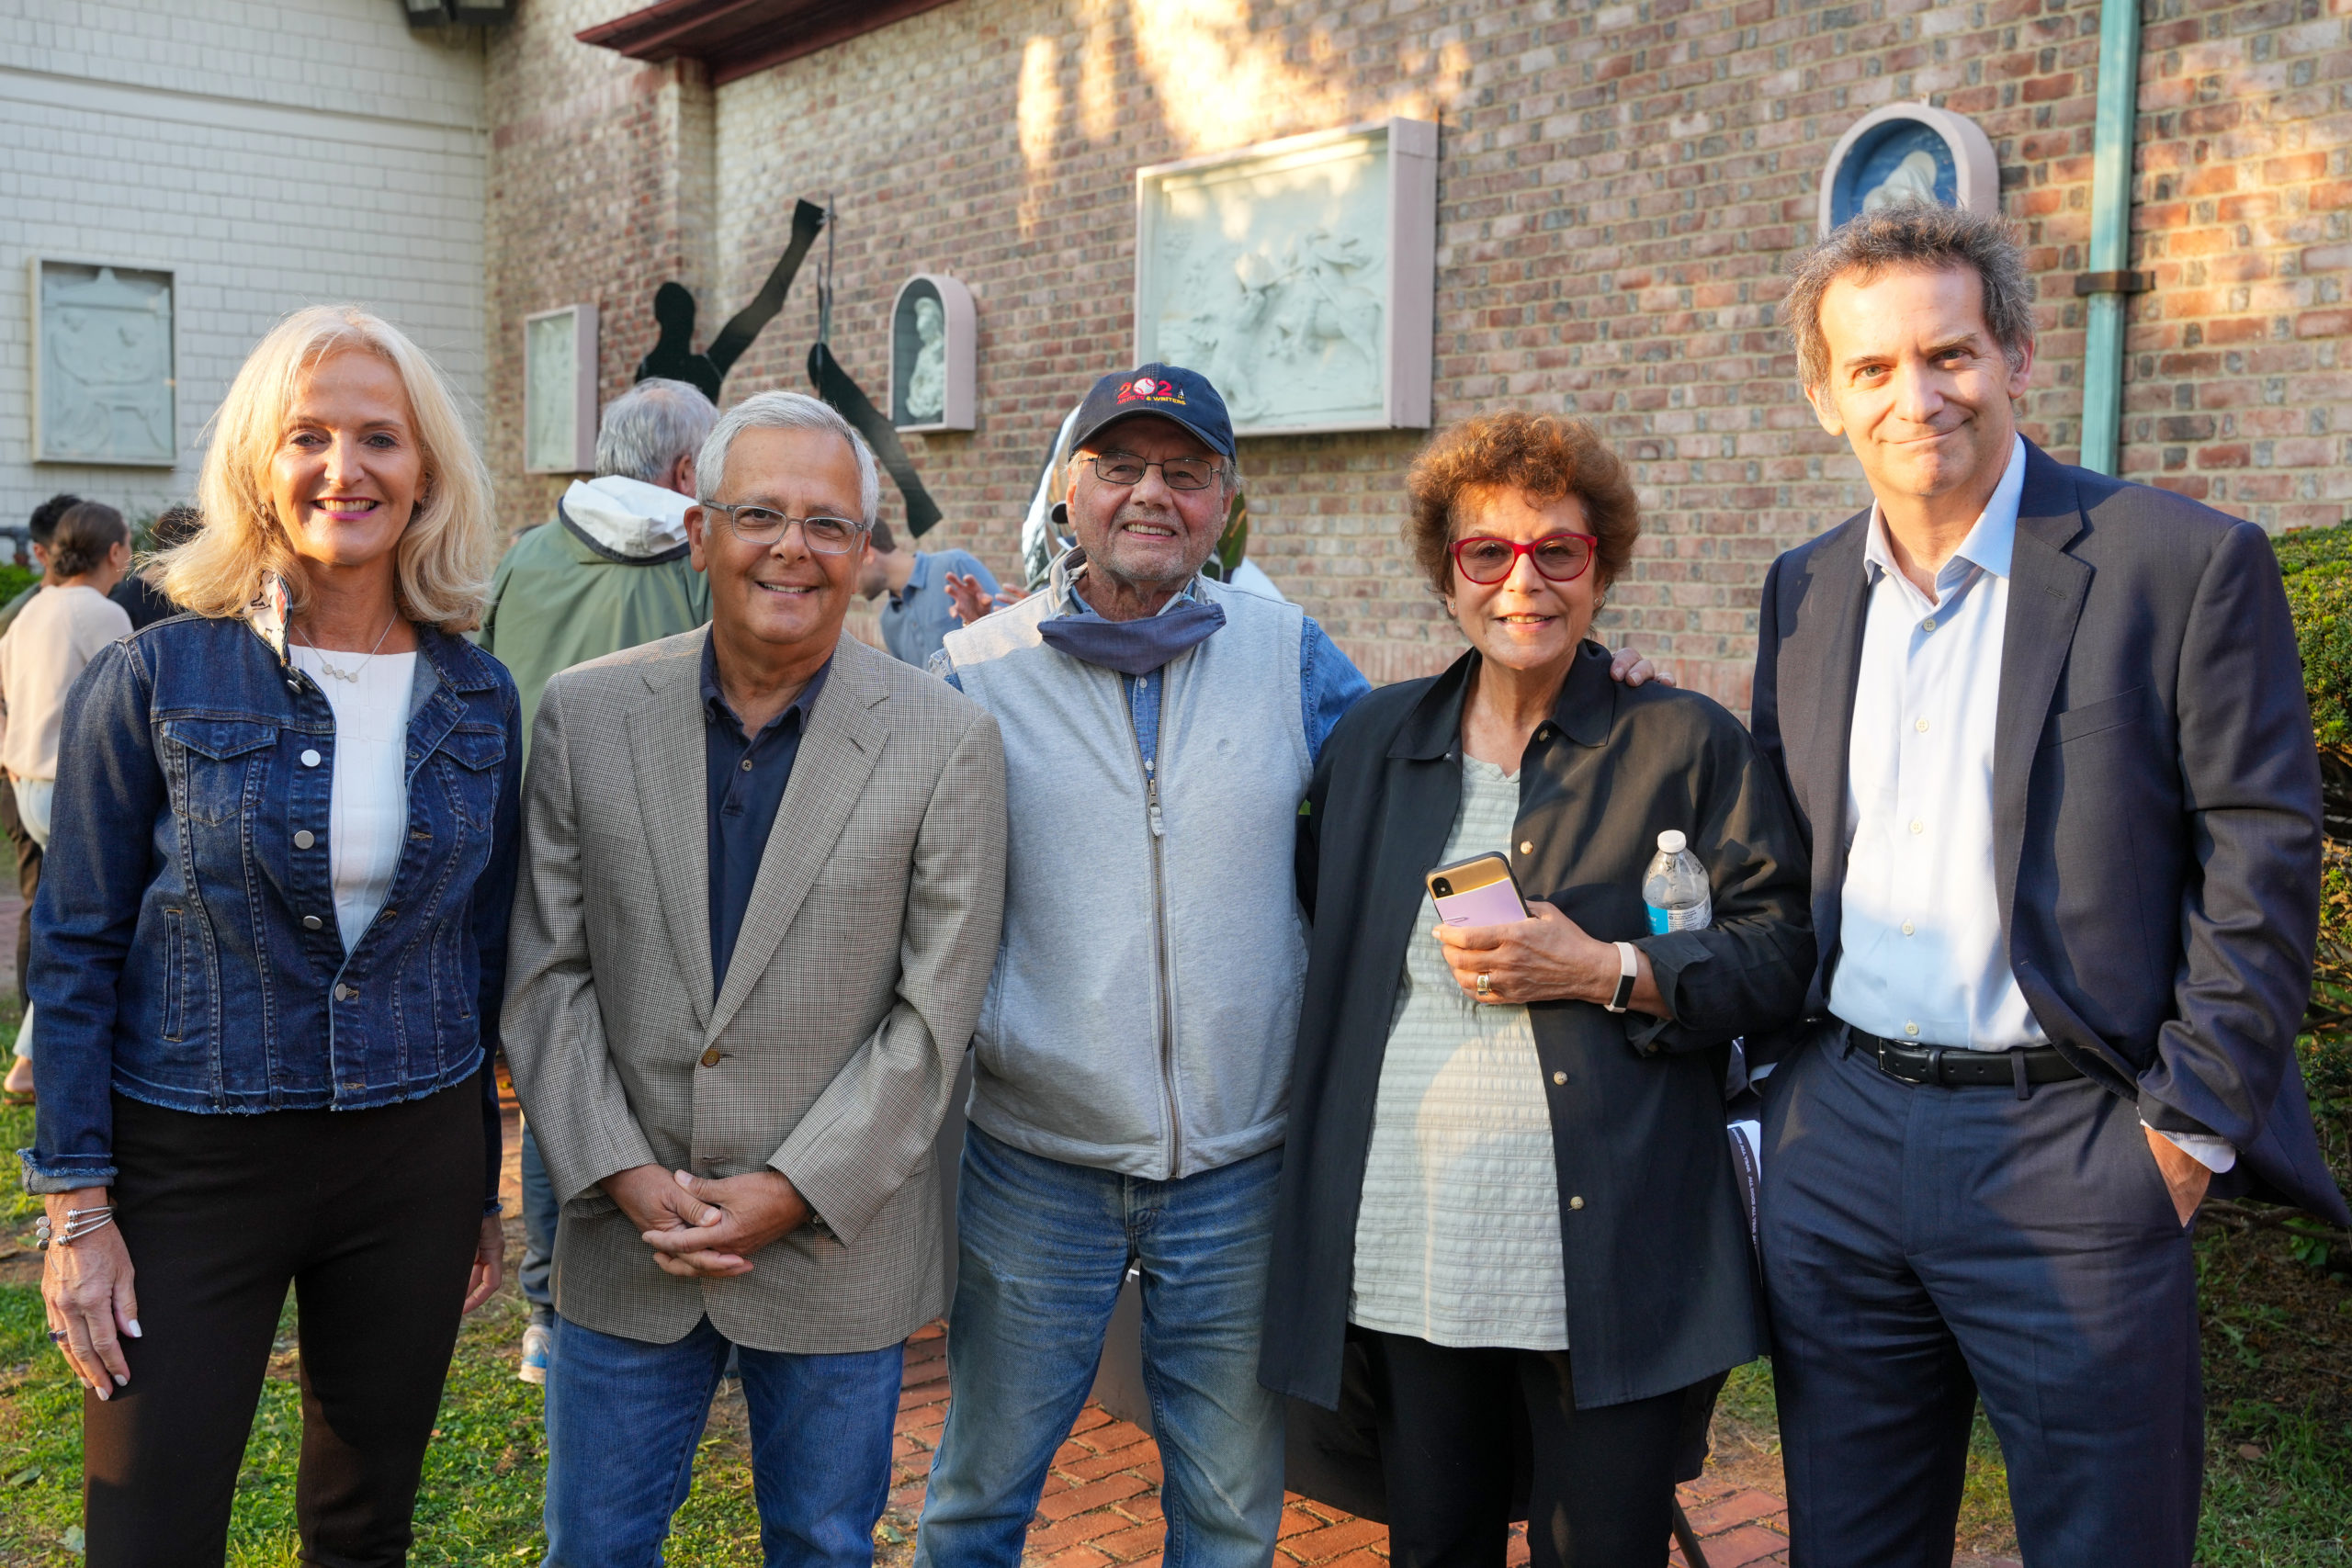 From left, Ann Liguori, Mike Lupica, Walter Bernard, Jacqui Lofaro and Nick Davis.